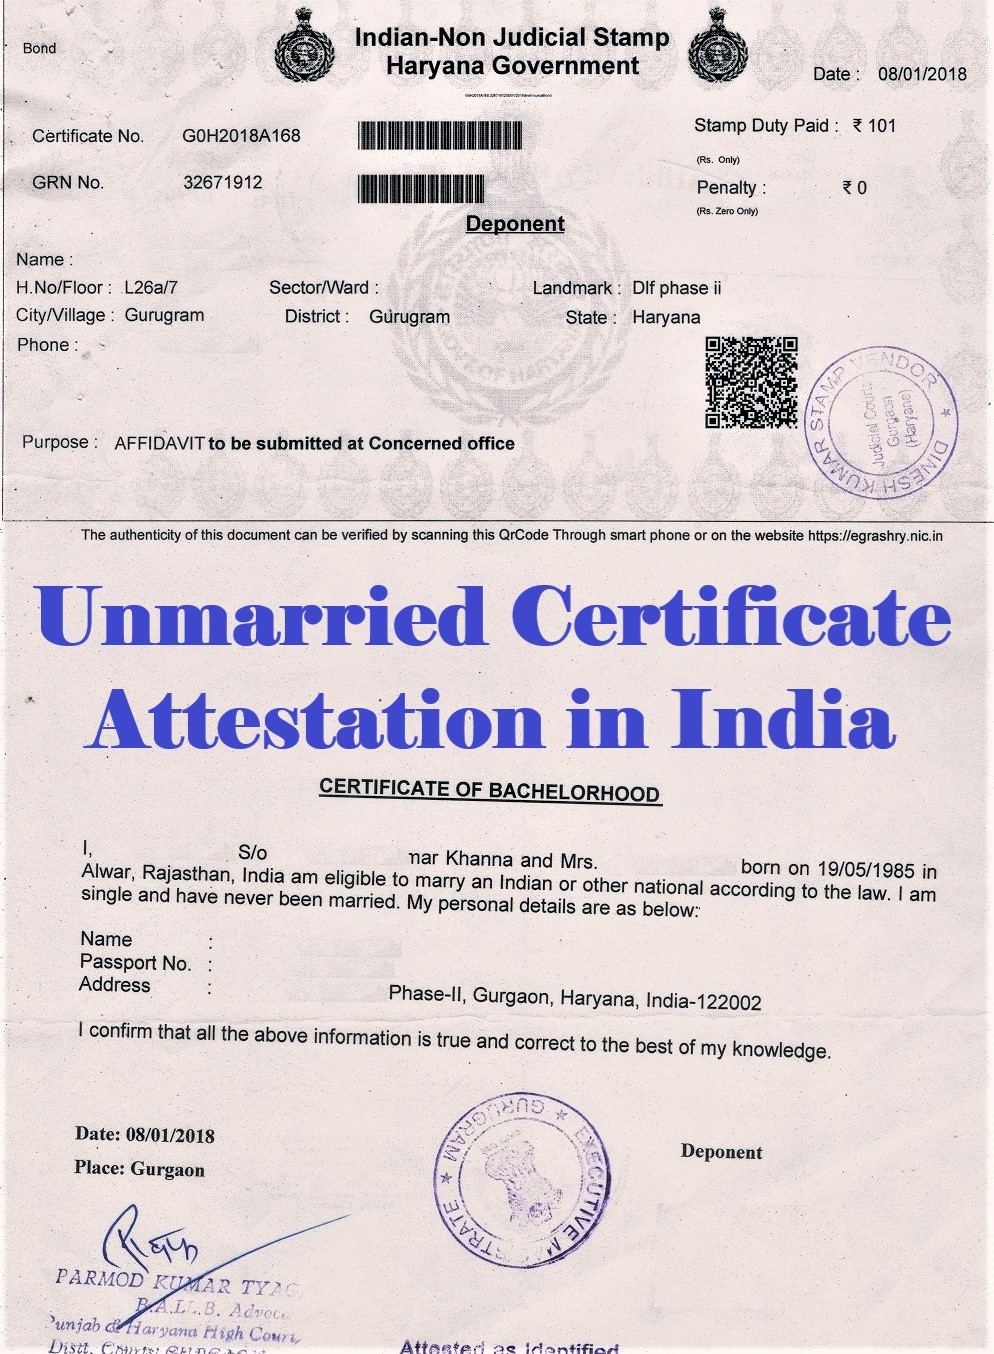 Unmarried Certificate Attestation from Kenya Embassy